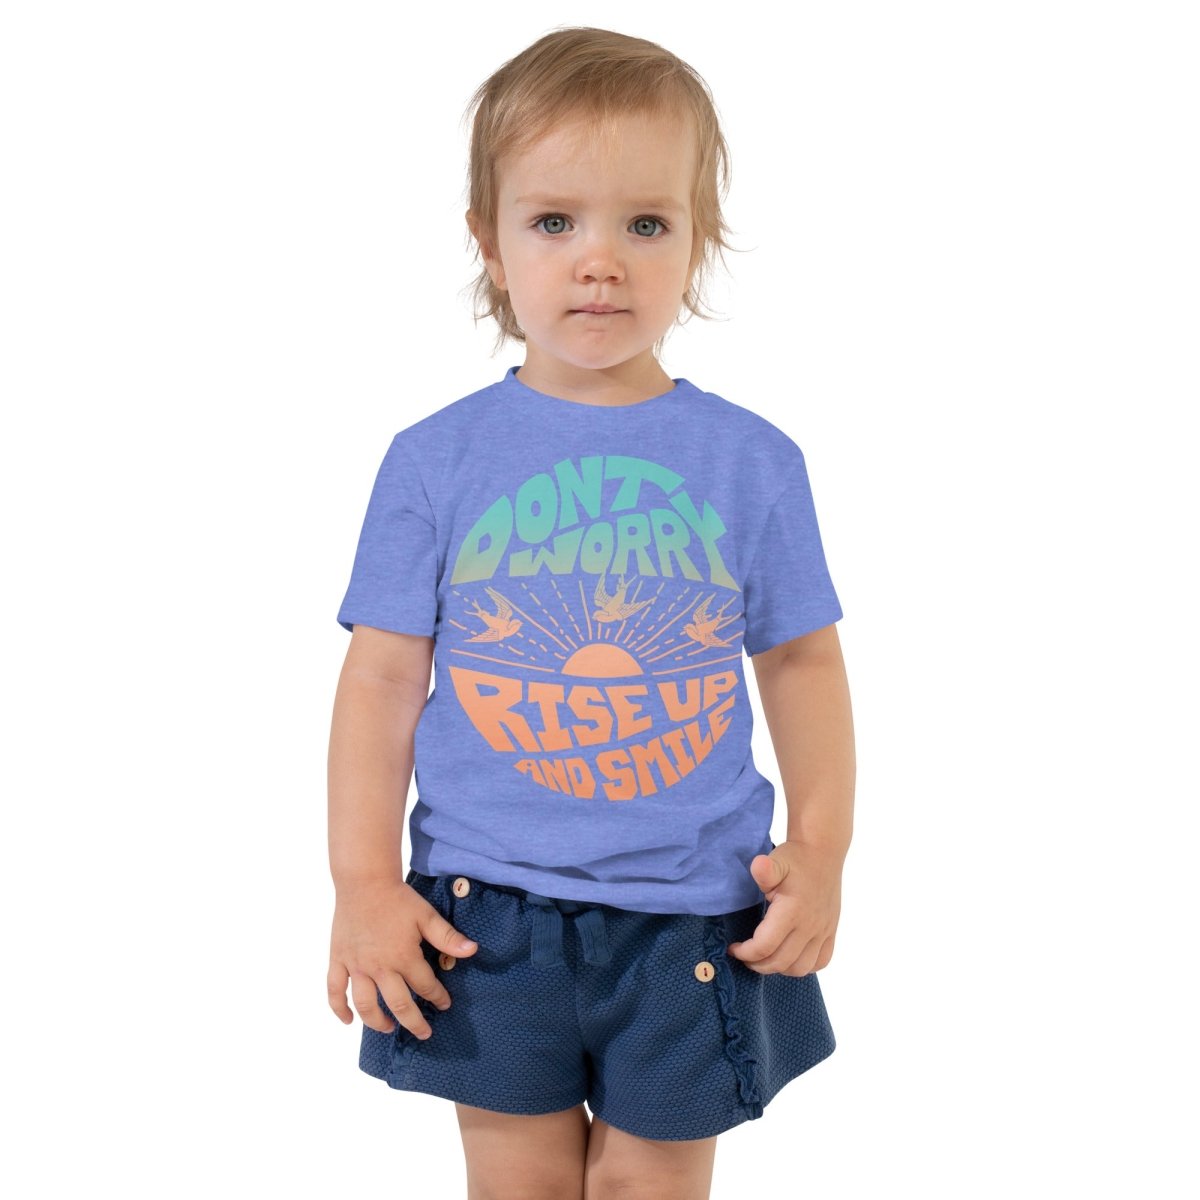 Don't Worry Premium Toddler T-Shirt, Zen Peace Love Gift